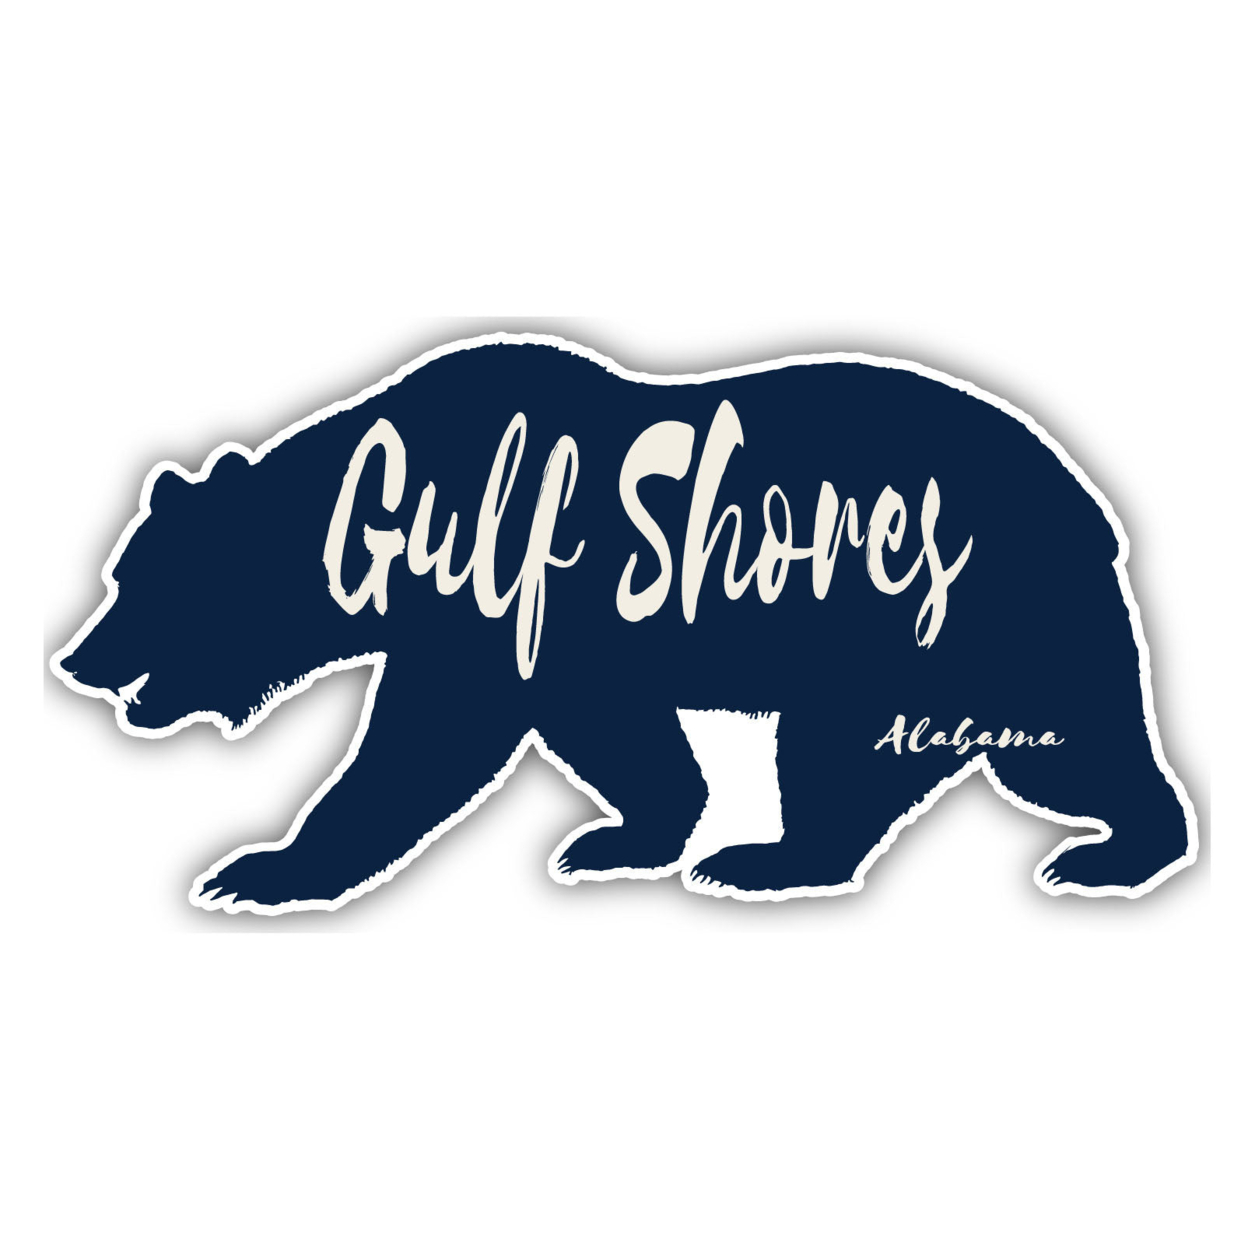 Gulf Shores Alabama Souvenir Decorative Stickers (Choose Theme And Size) - Single Unit, 2-Inch, Tent